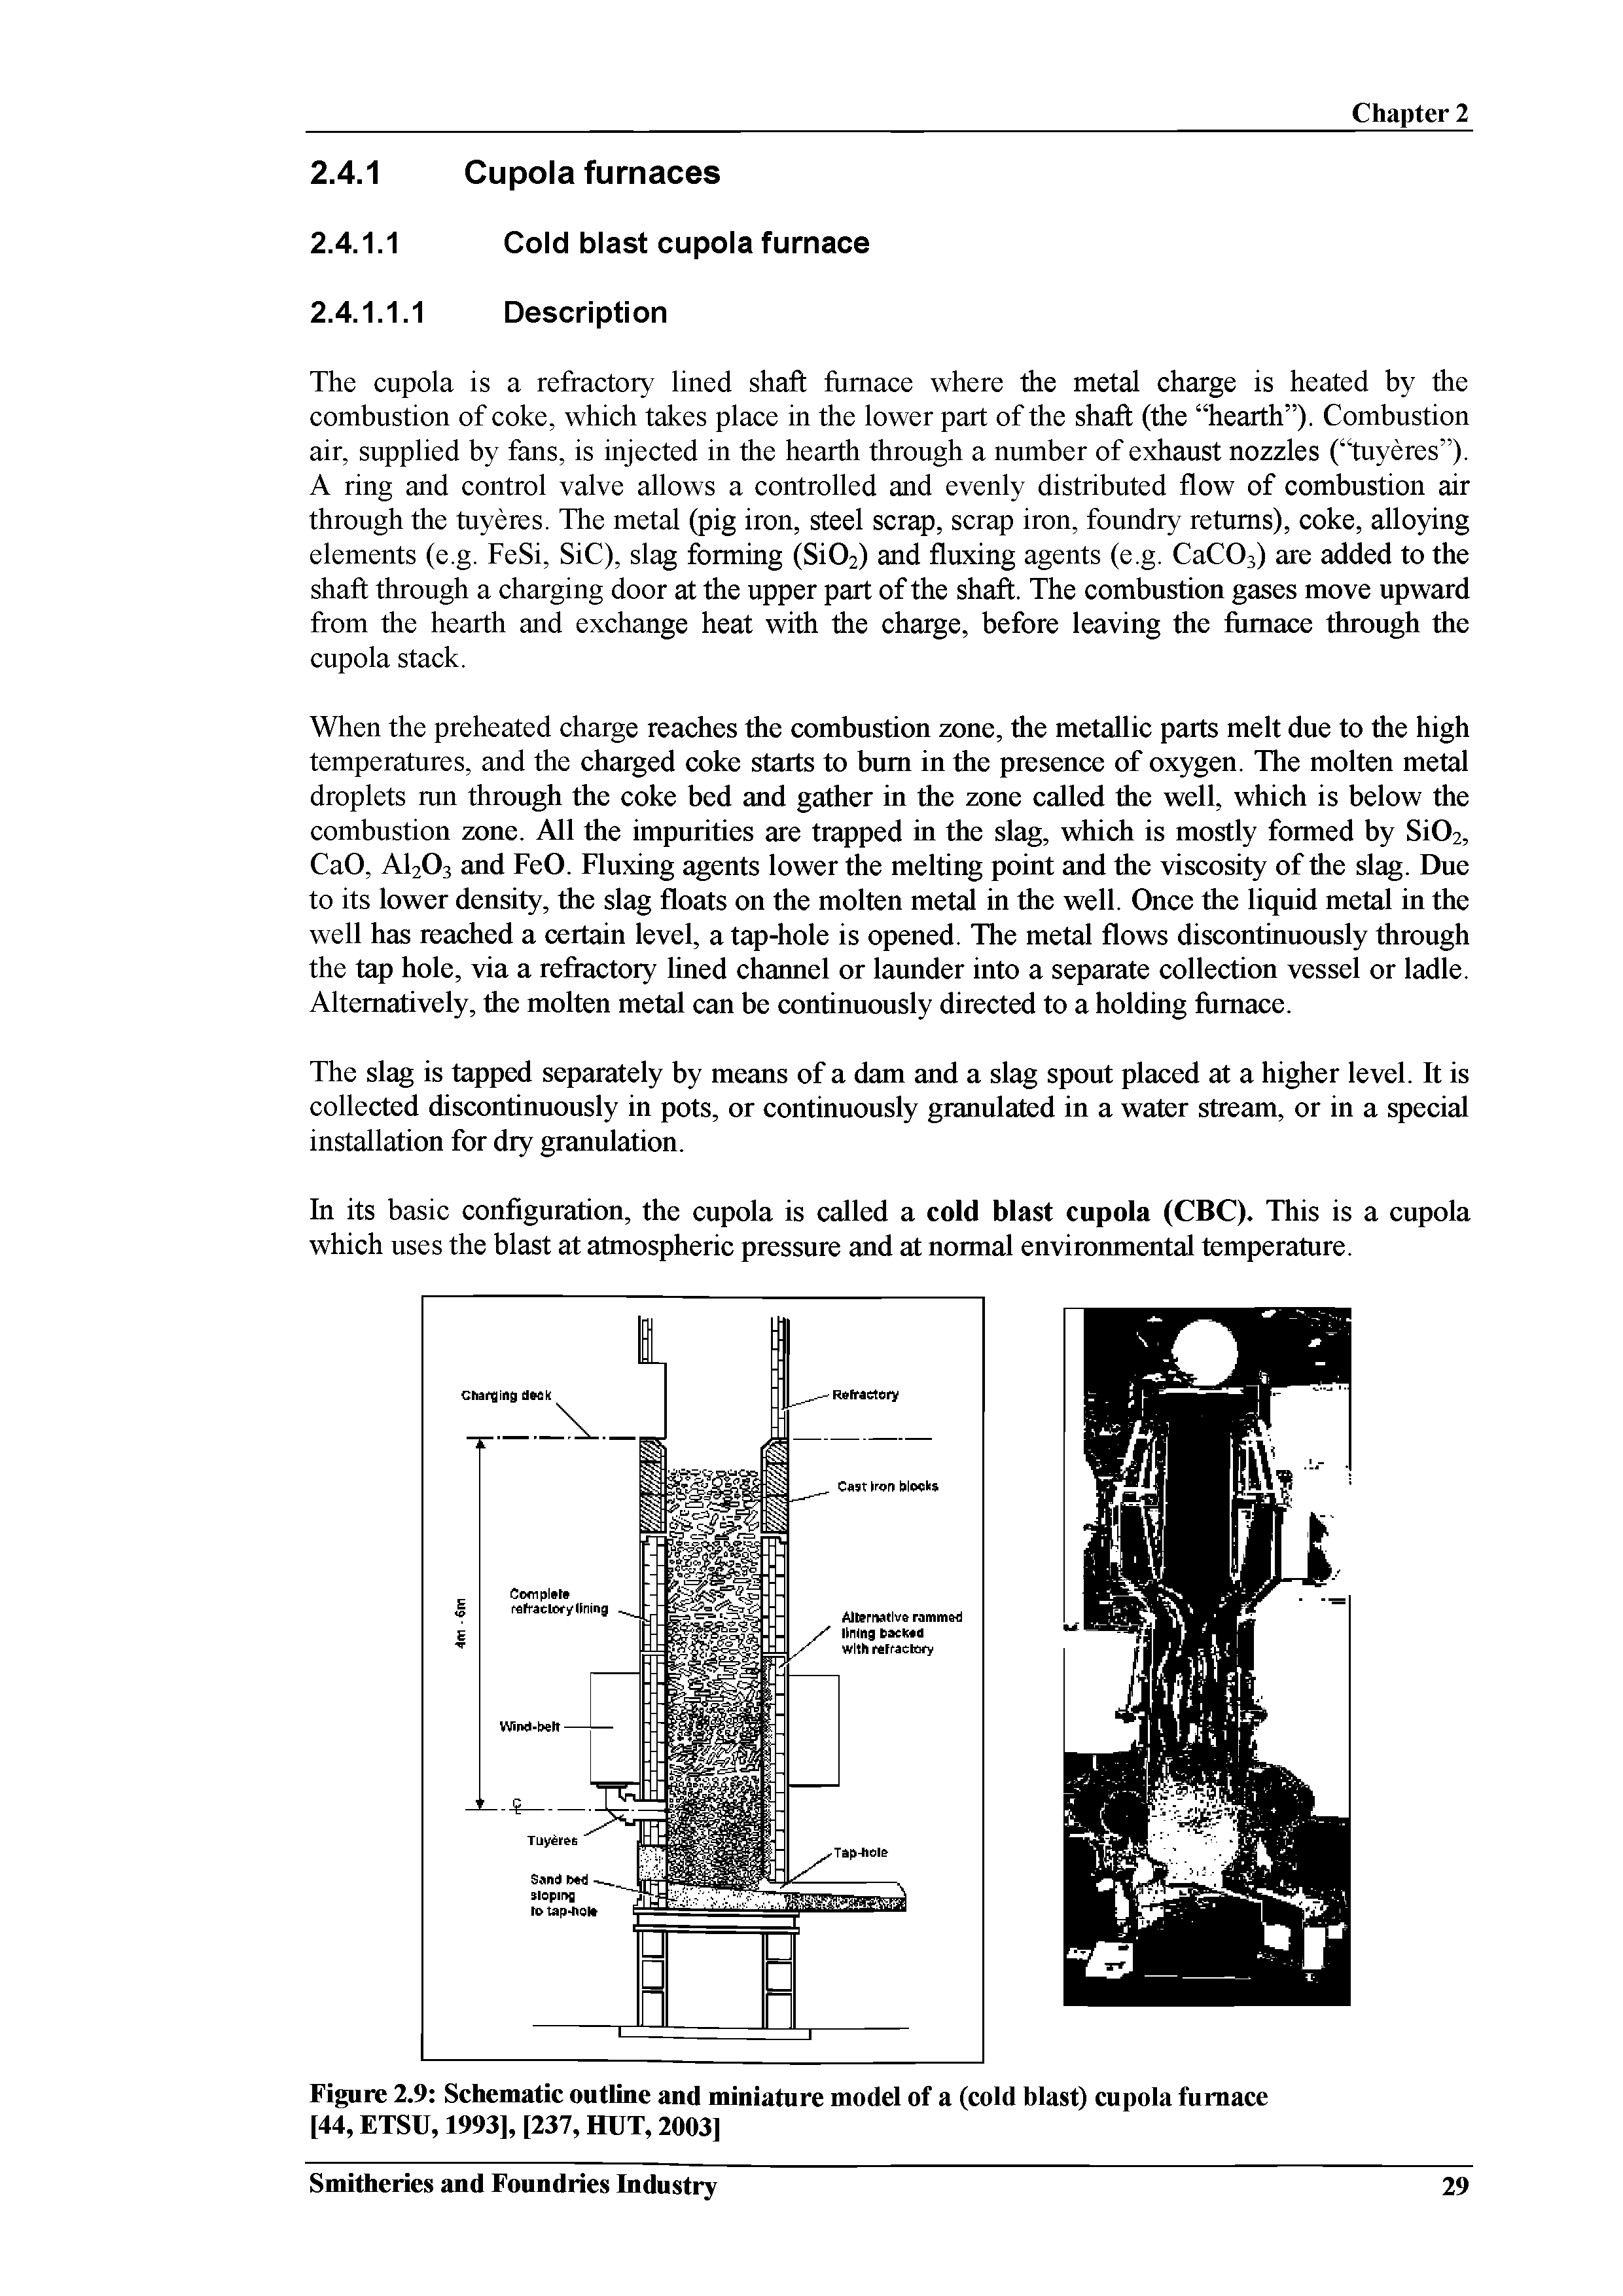 Figure 2.9 Schematic outline and miniature model of a (cold blast) cupola furnace [44, ETSU, 1993], [237, HUT, 2003]...